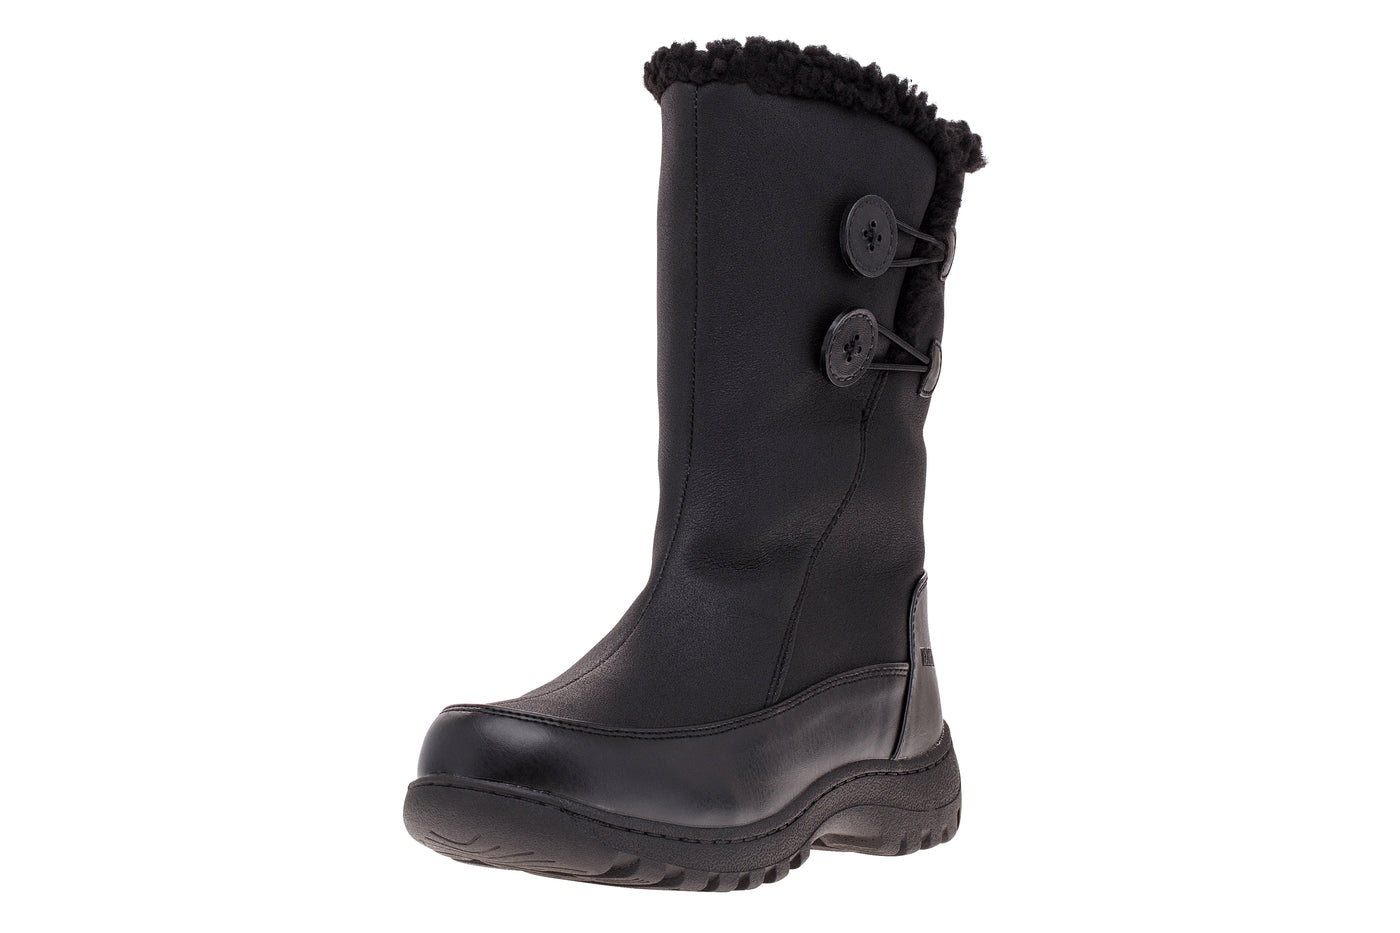 Weatherproof Women's Miranda Waterproof Boot - Available In Medium And Wide Width